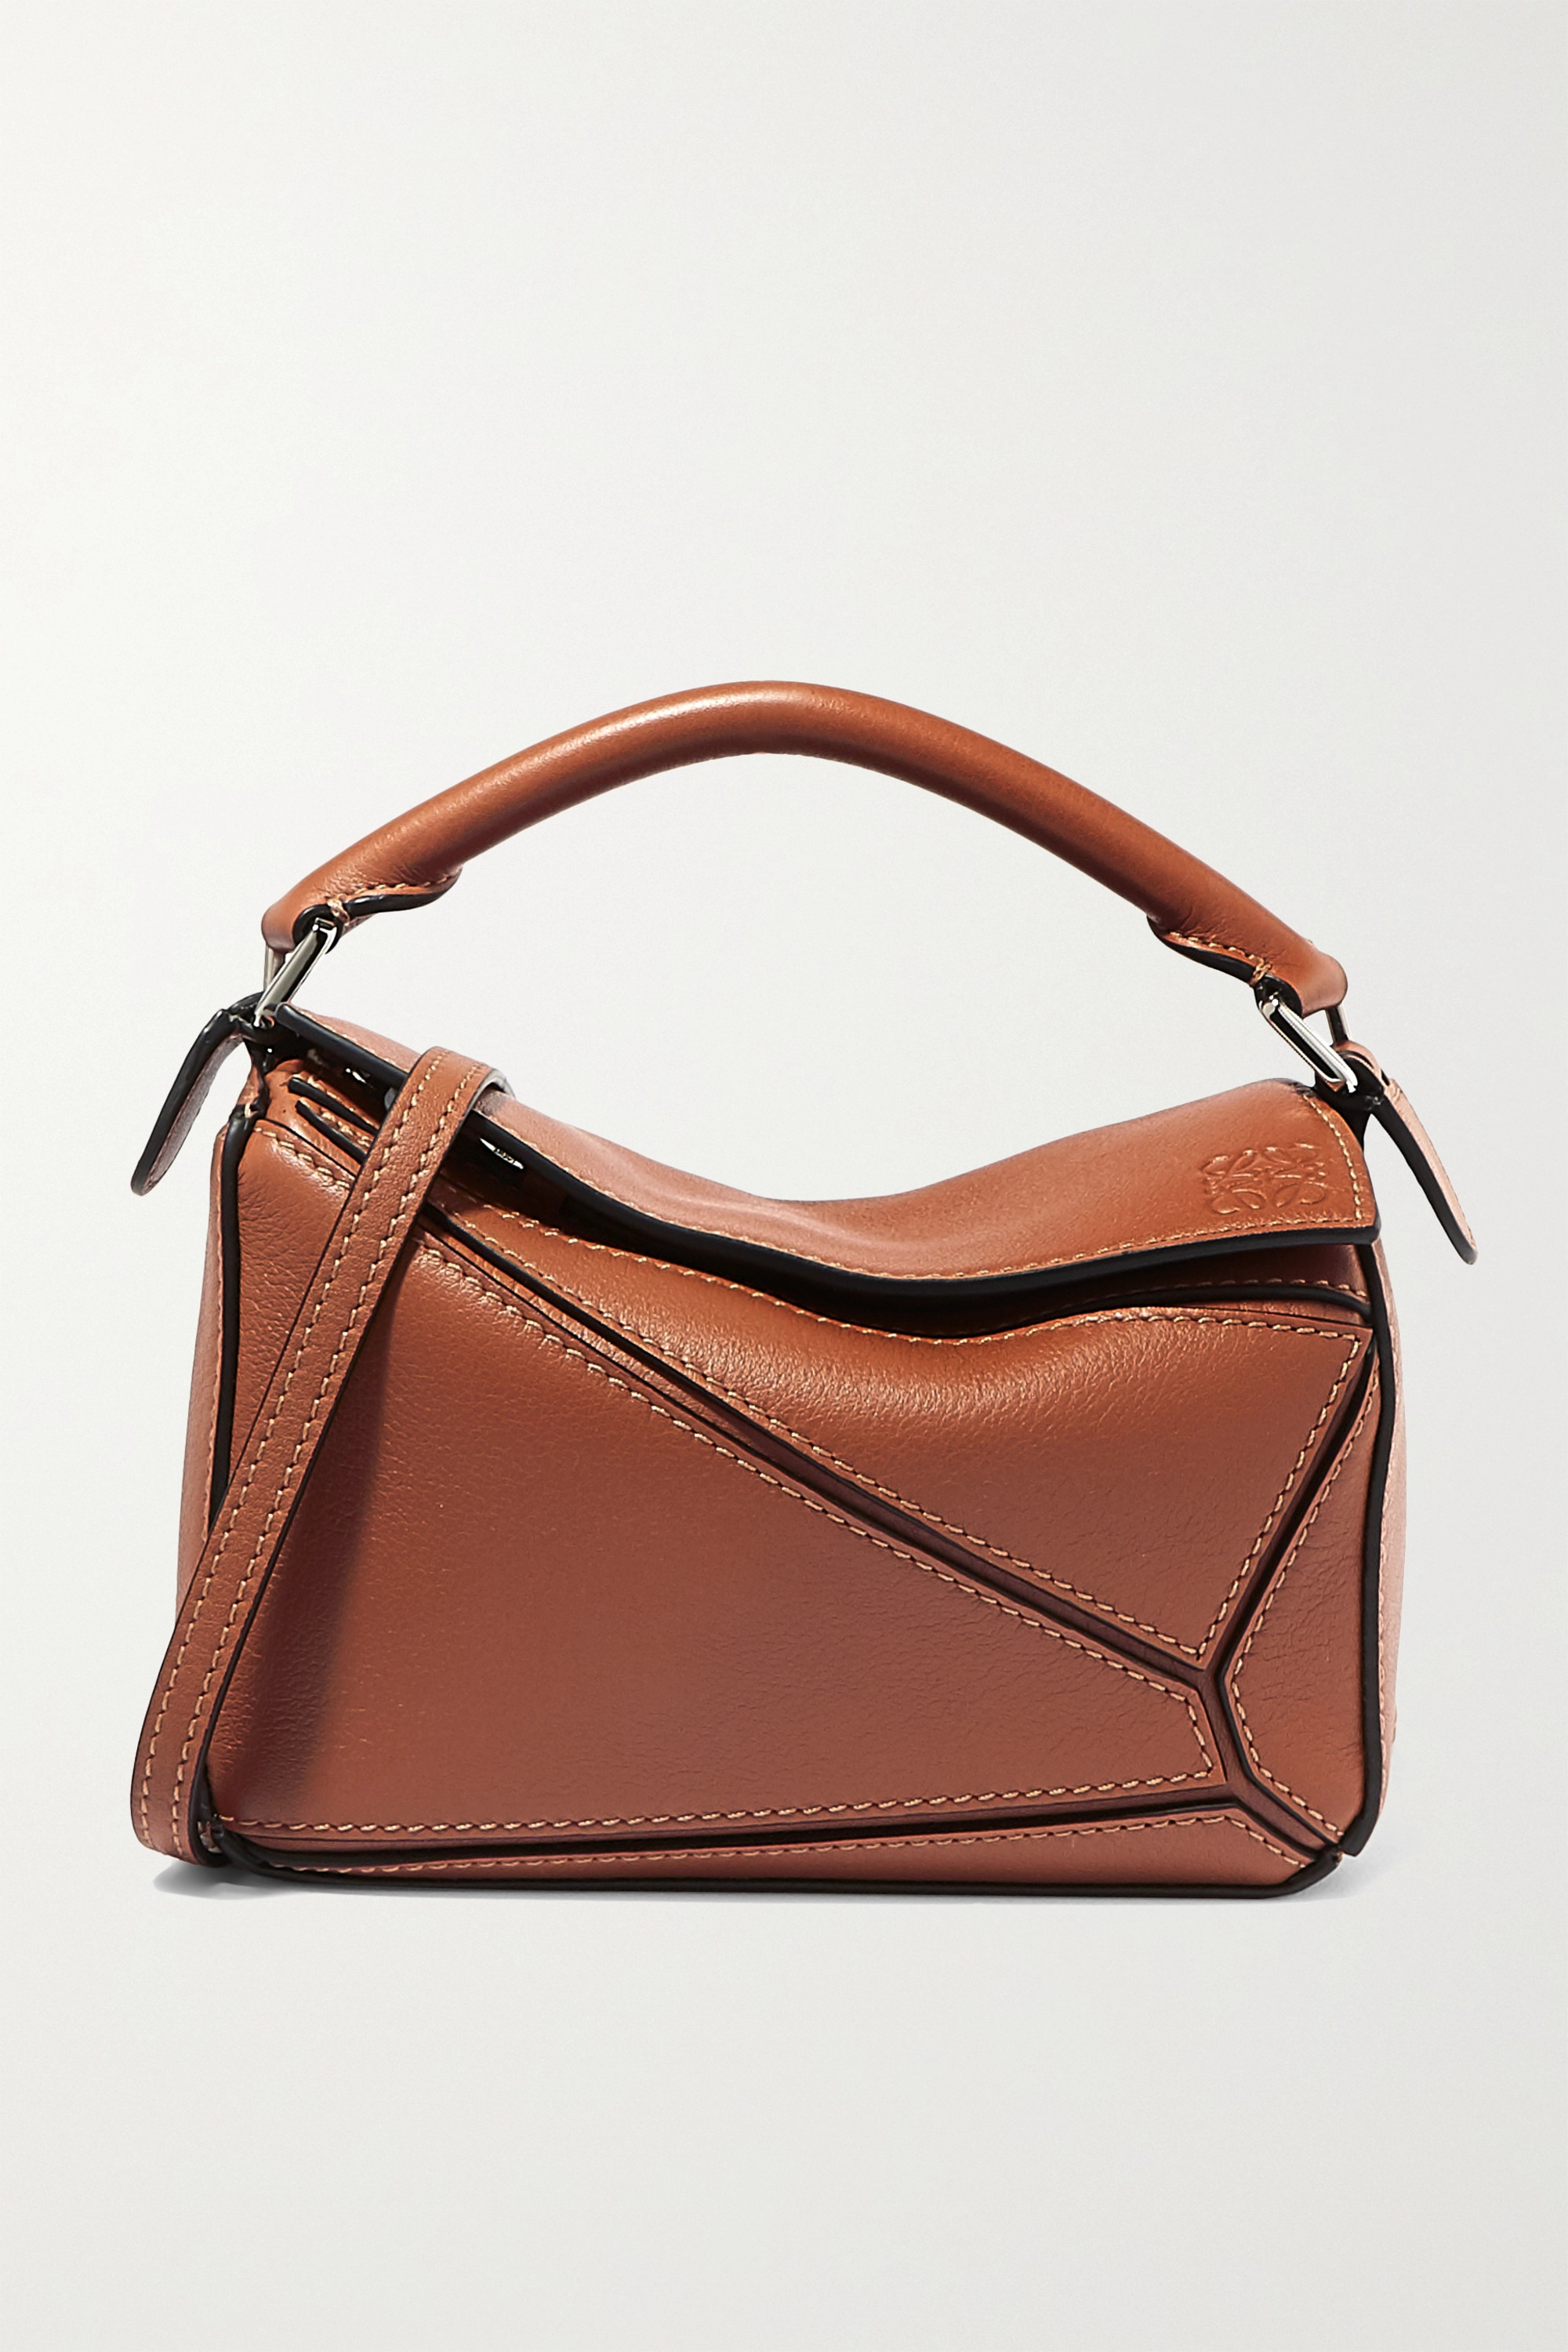 10 classic designer handbags that celebrities love • l!fe • The